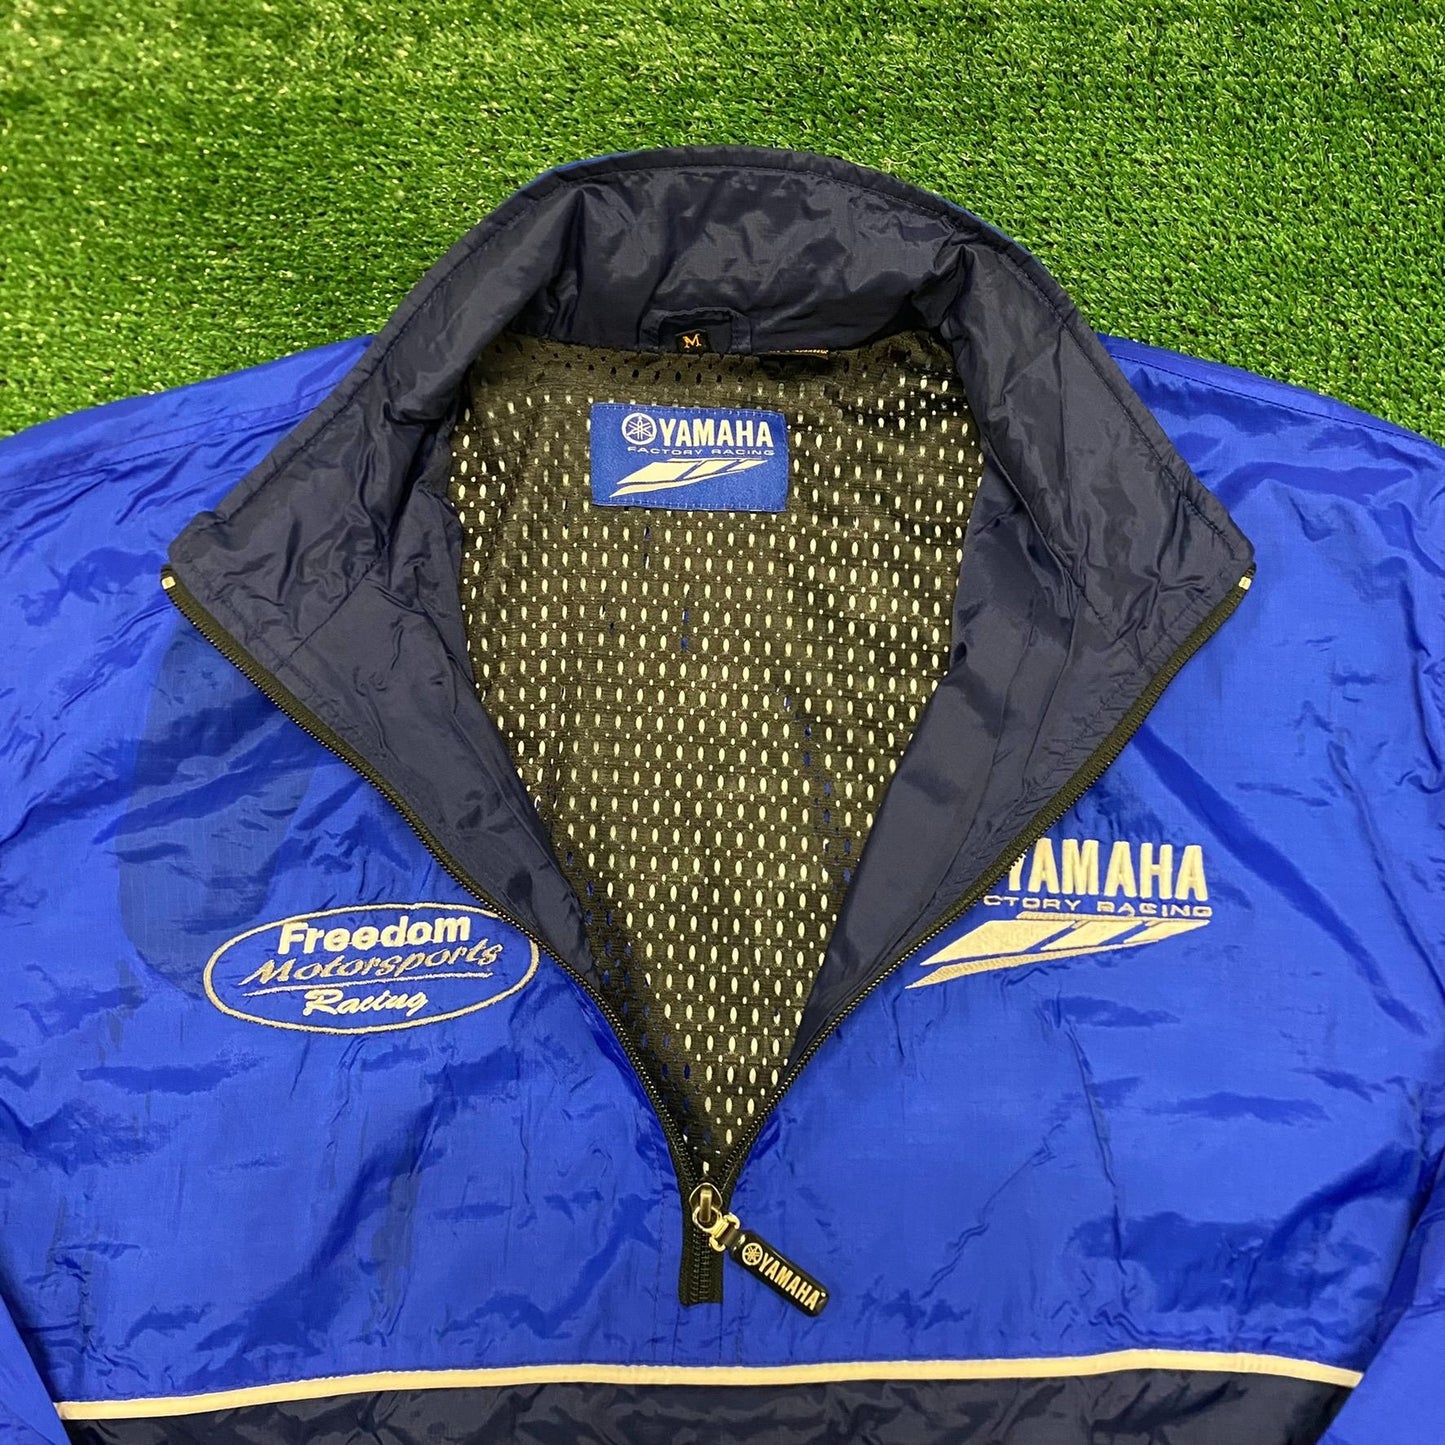 Yamaha Vintage Biker Moto Racing Pullover Jacket